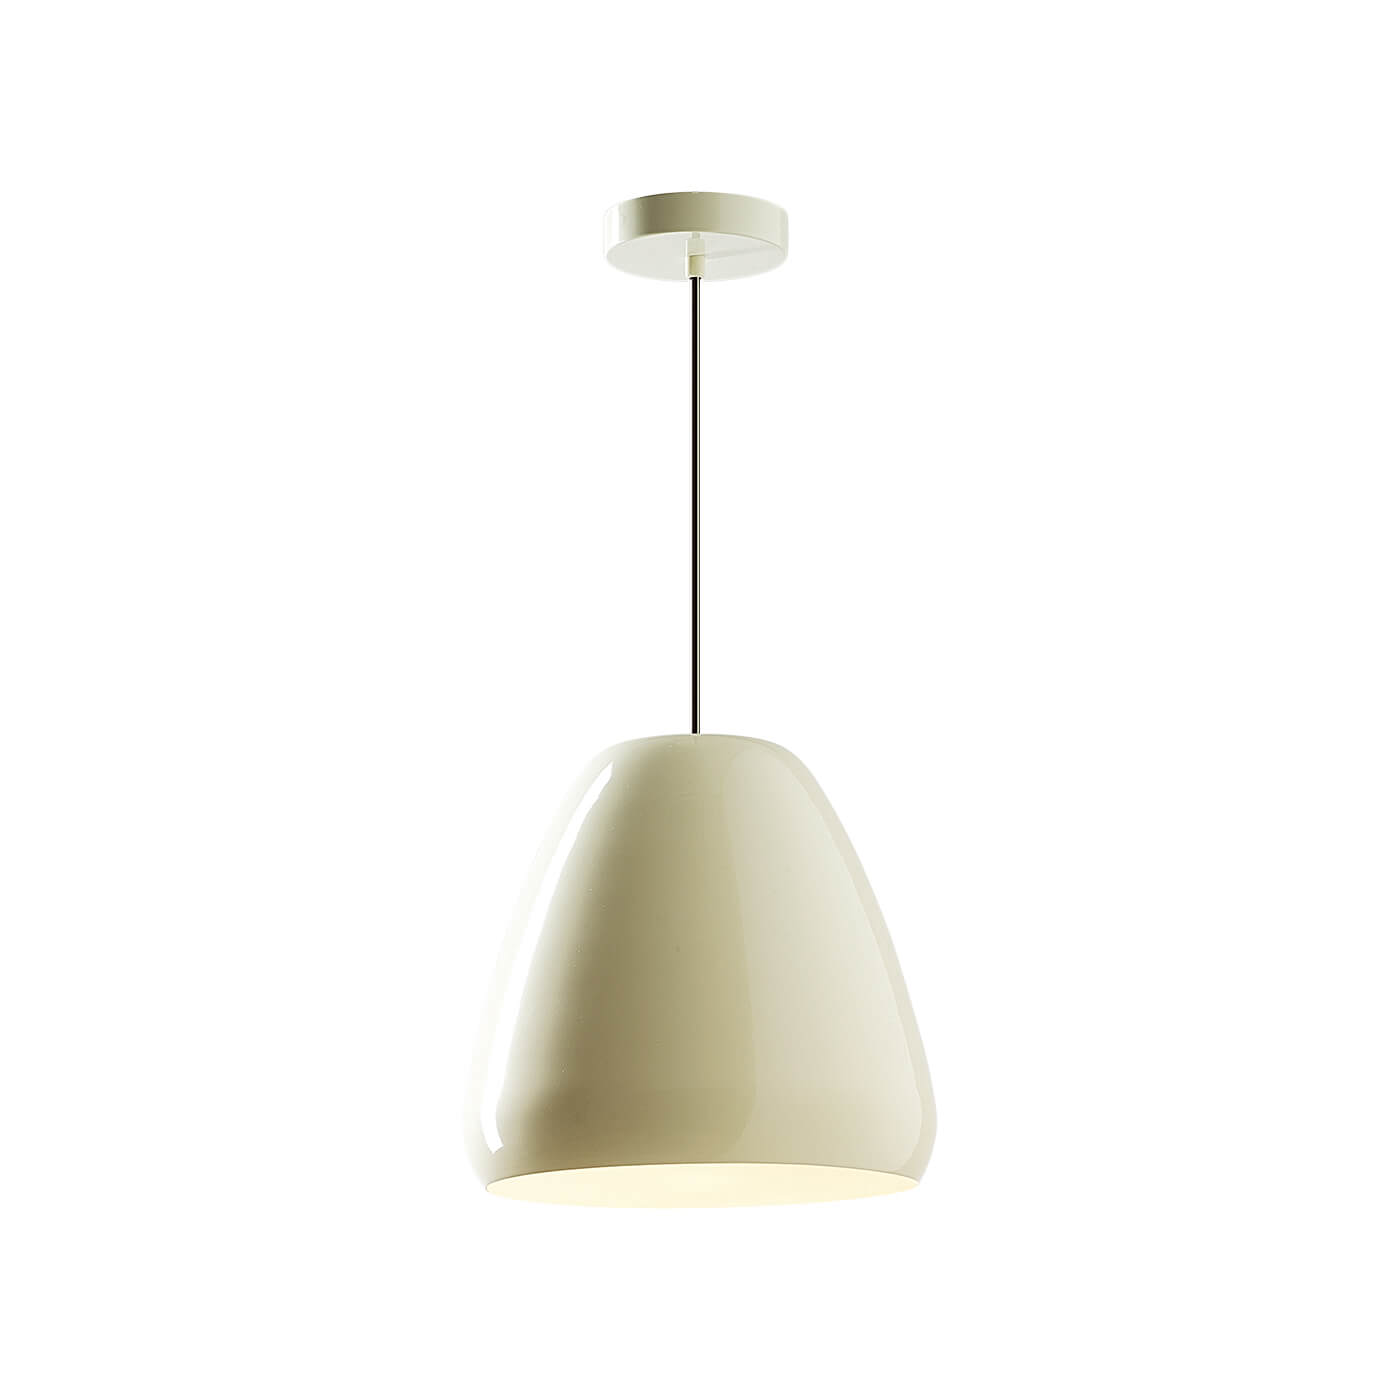 Pendul alb RANG – Design modern, minimalist pentru birou, office, horeca